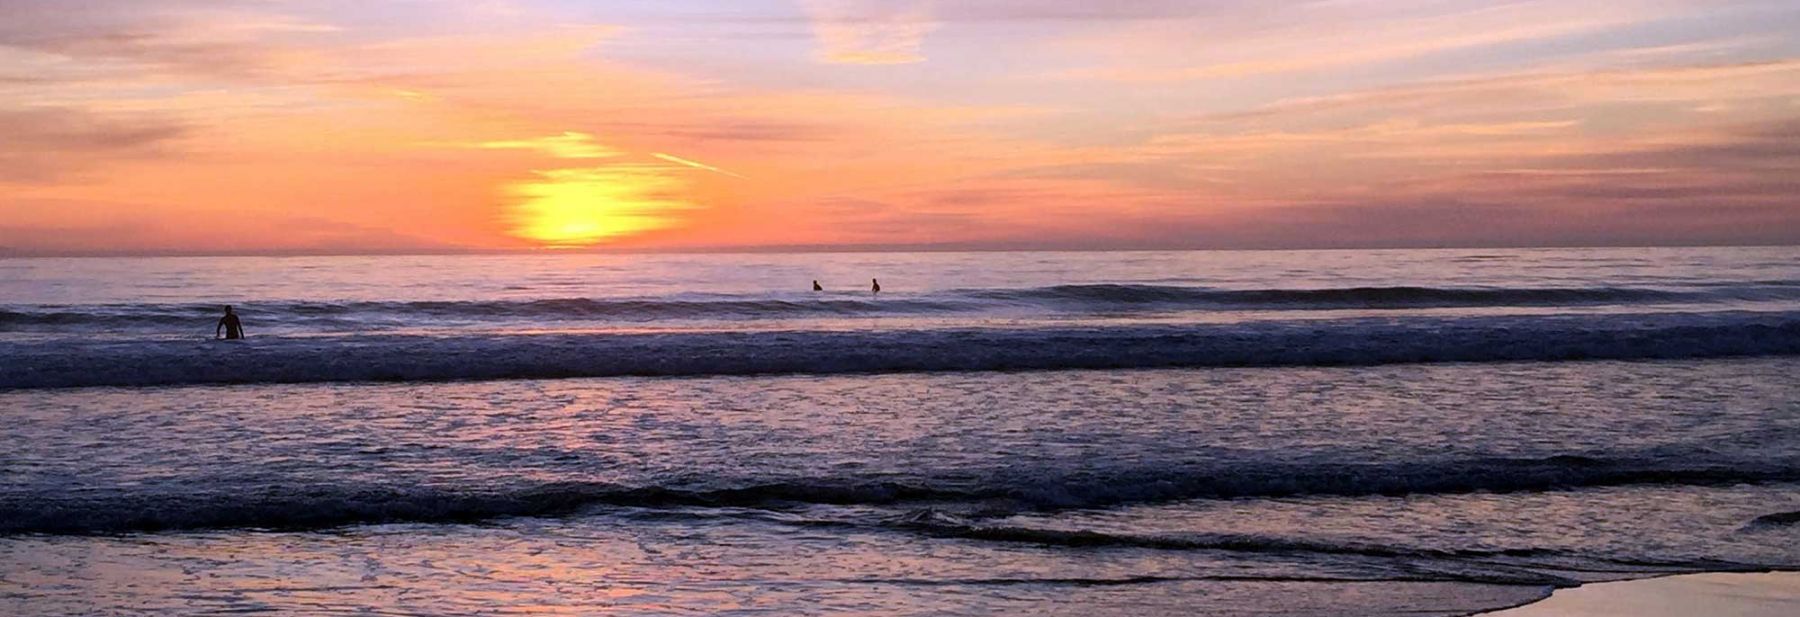 Beach sunset over surf